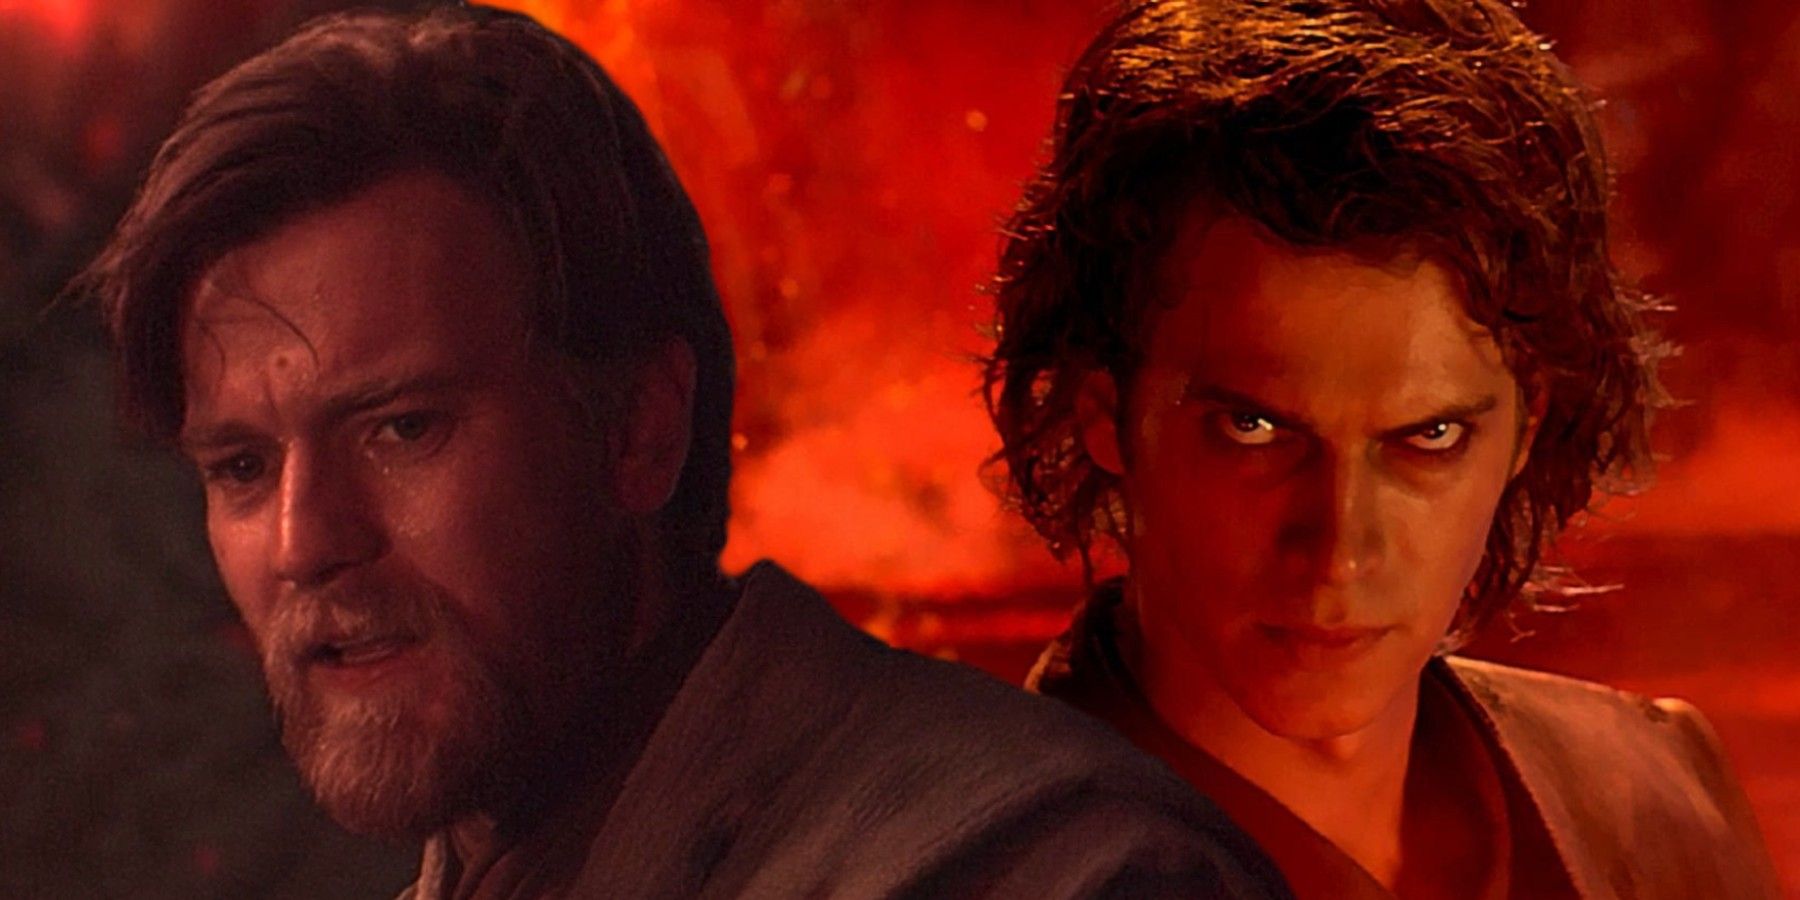 Star Wars Revenge of the Sith - Obi Wan Kenobi and Anakin Skywalker